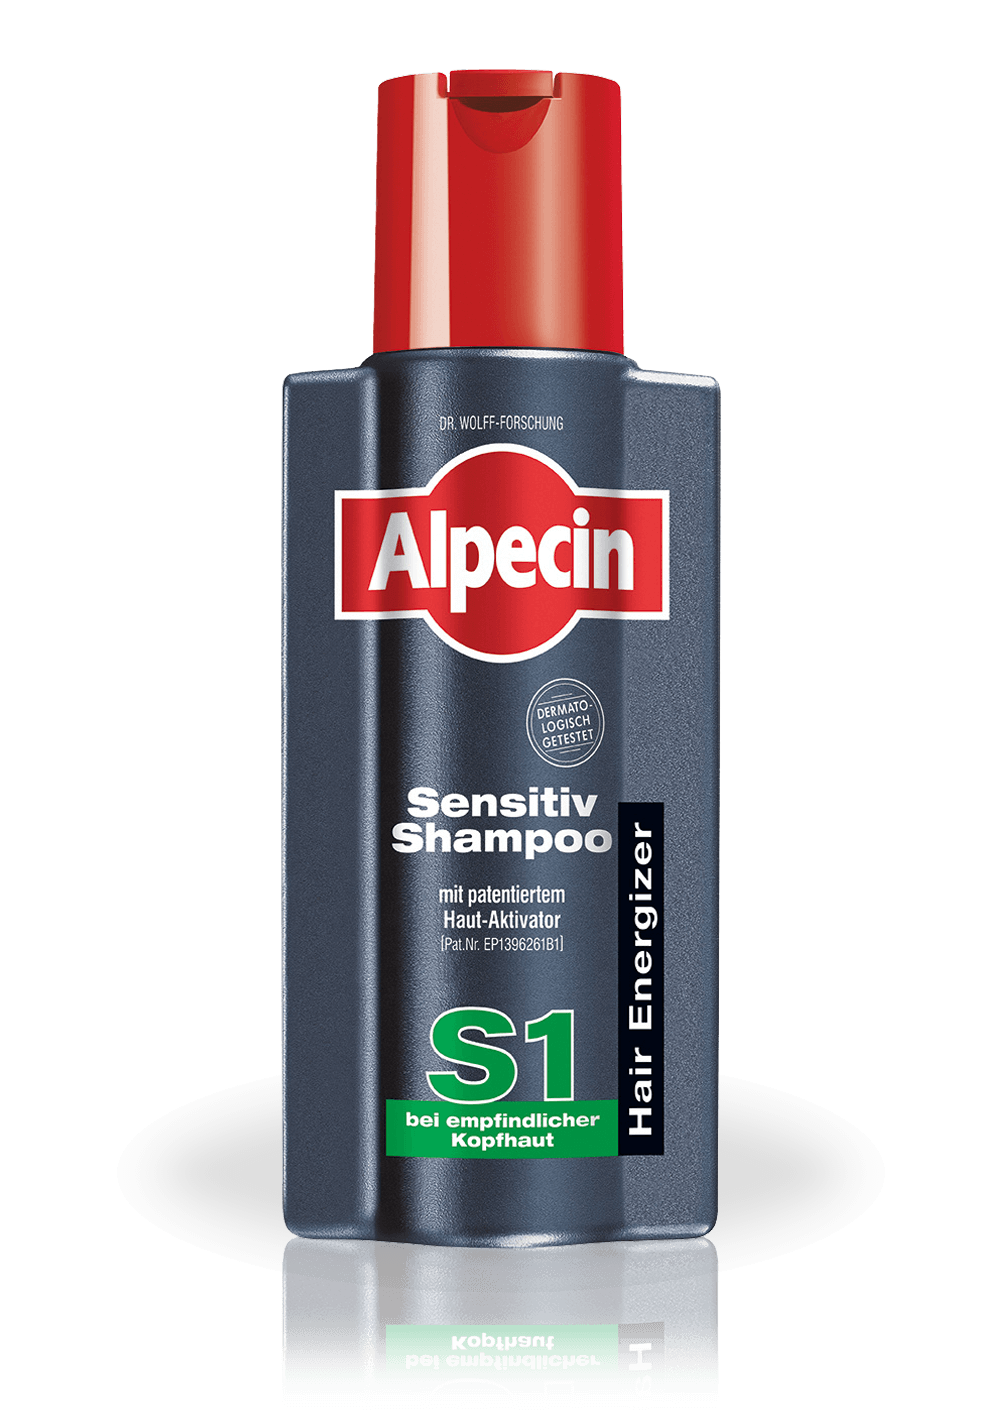 Image of Alpecin Hair Energizer Sensitiv Shampoo S1 (250ml)